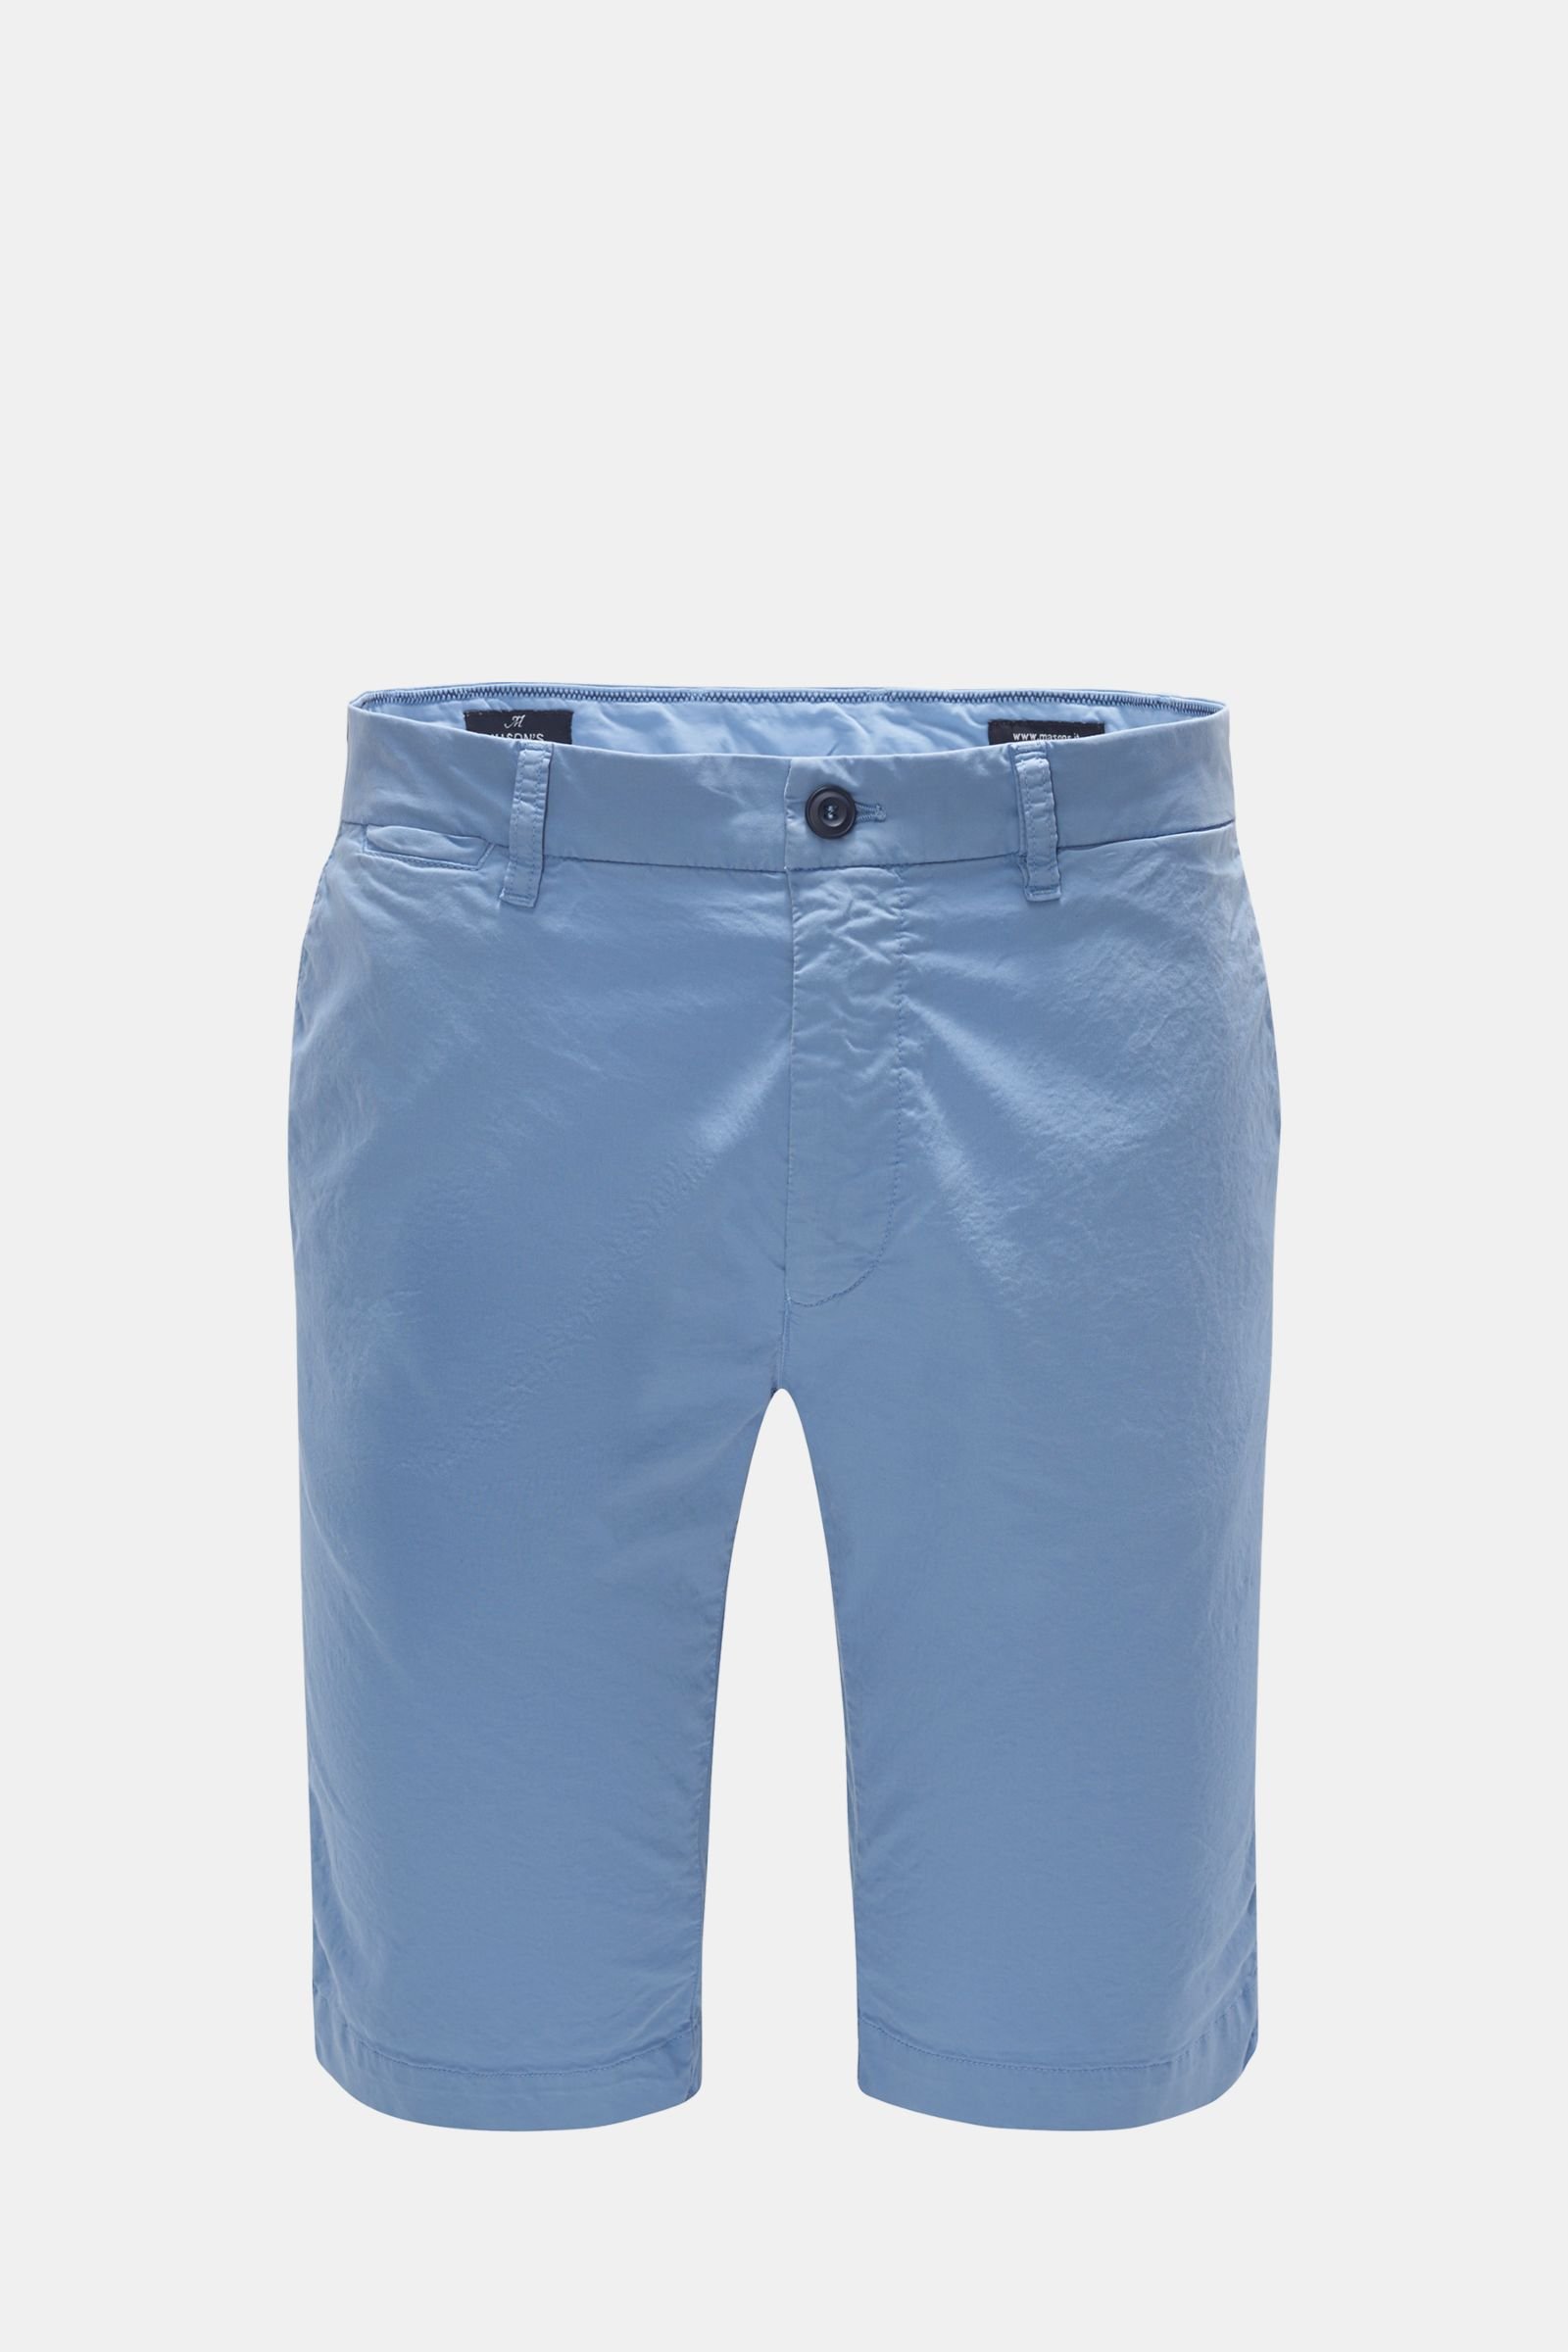 Bermuda shorts 'London' light blue